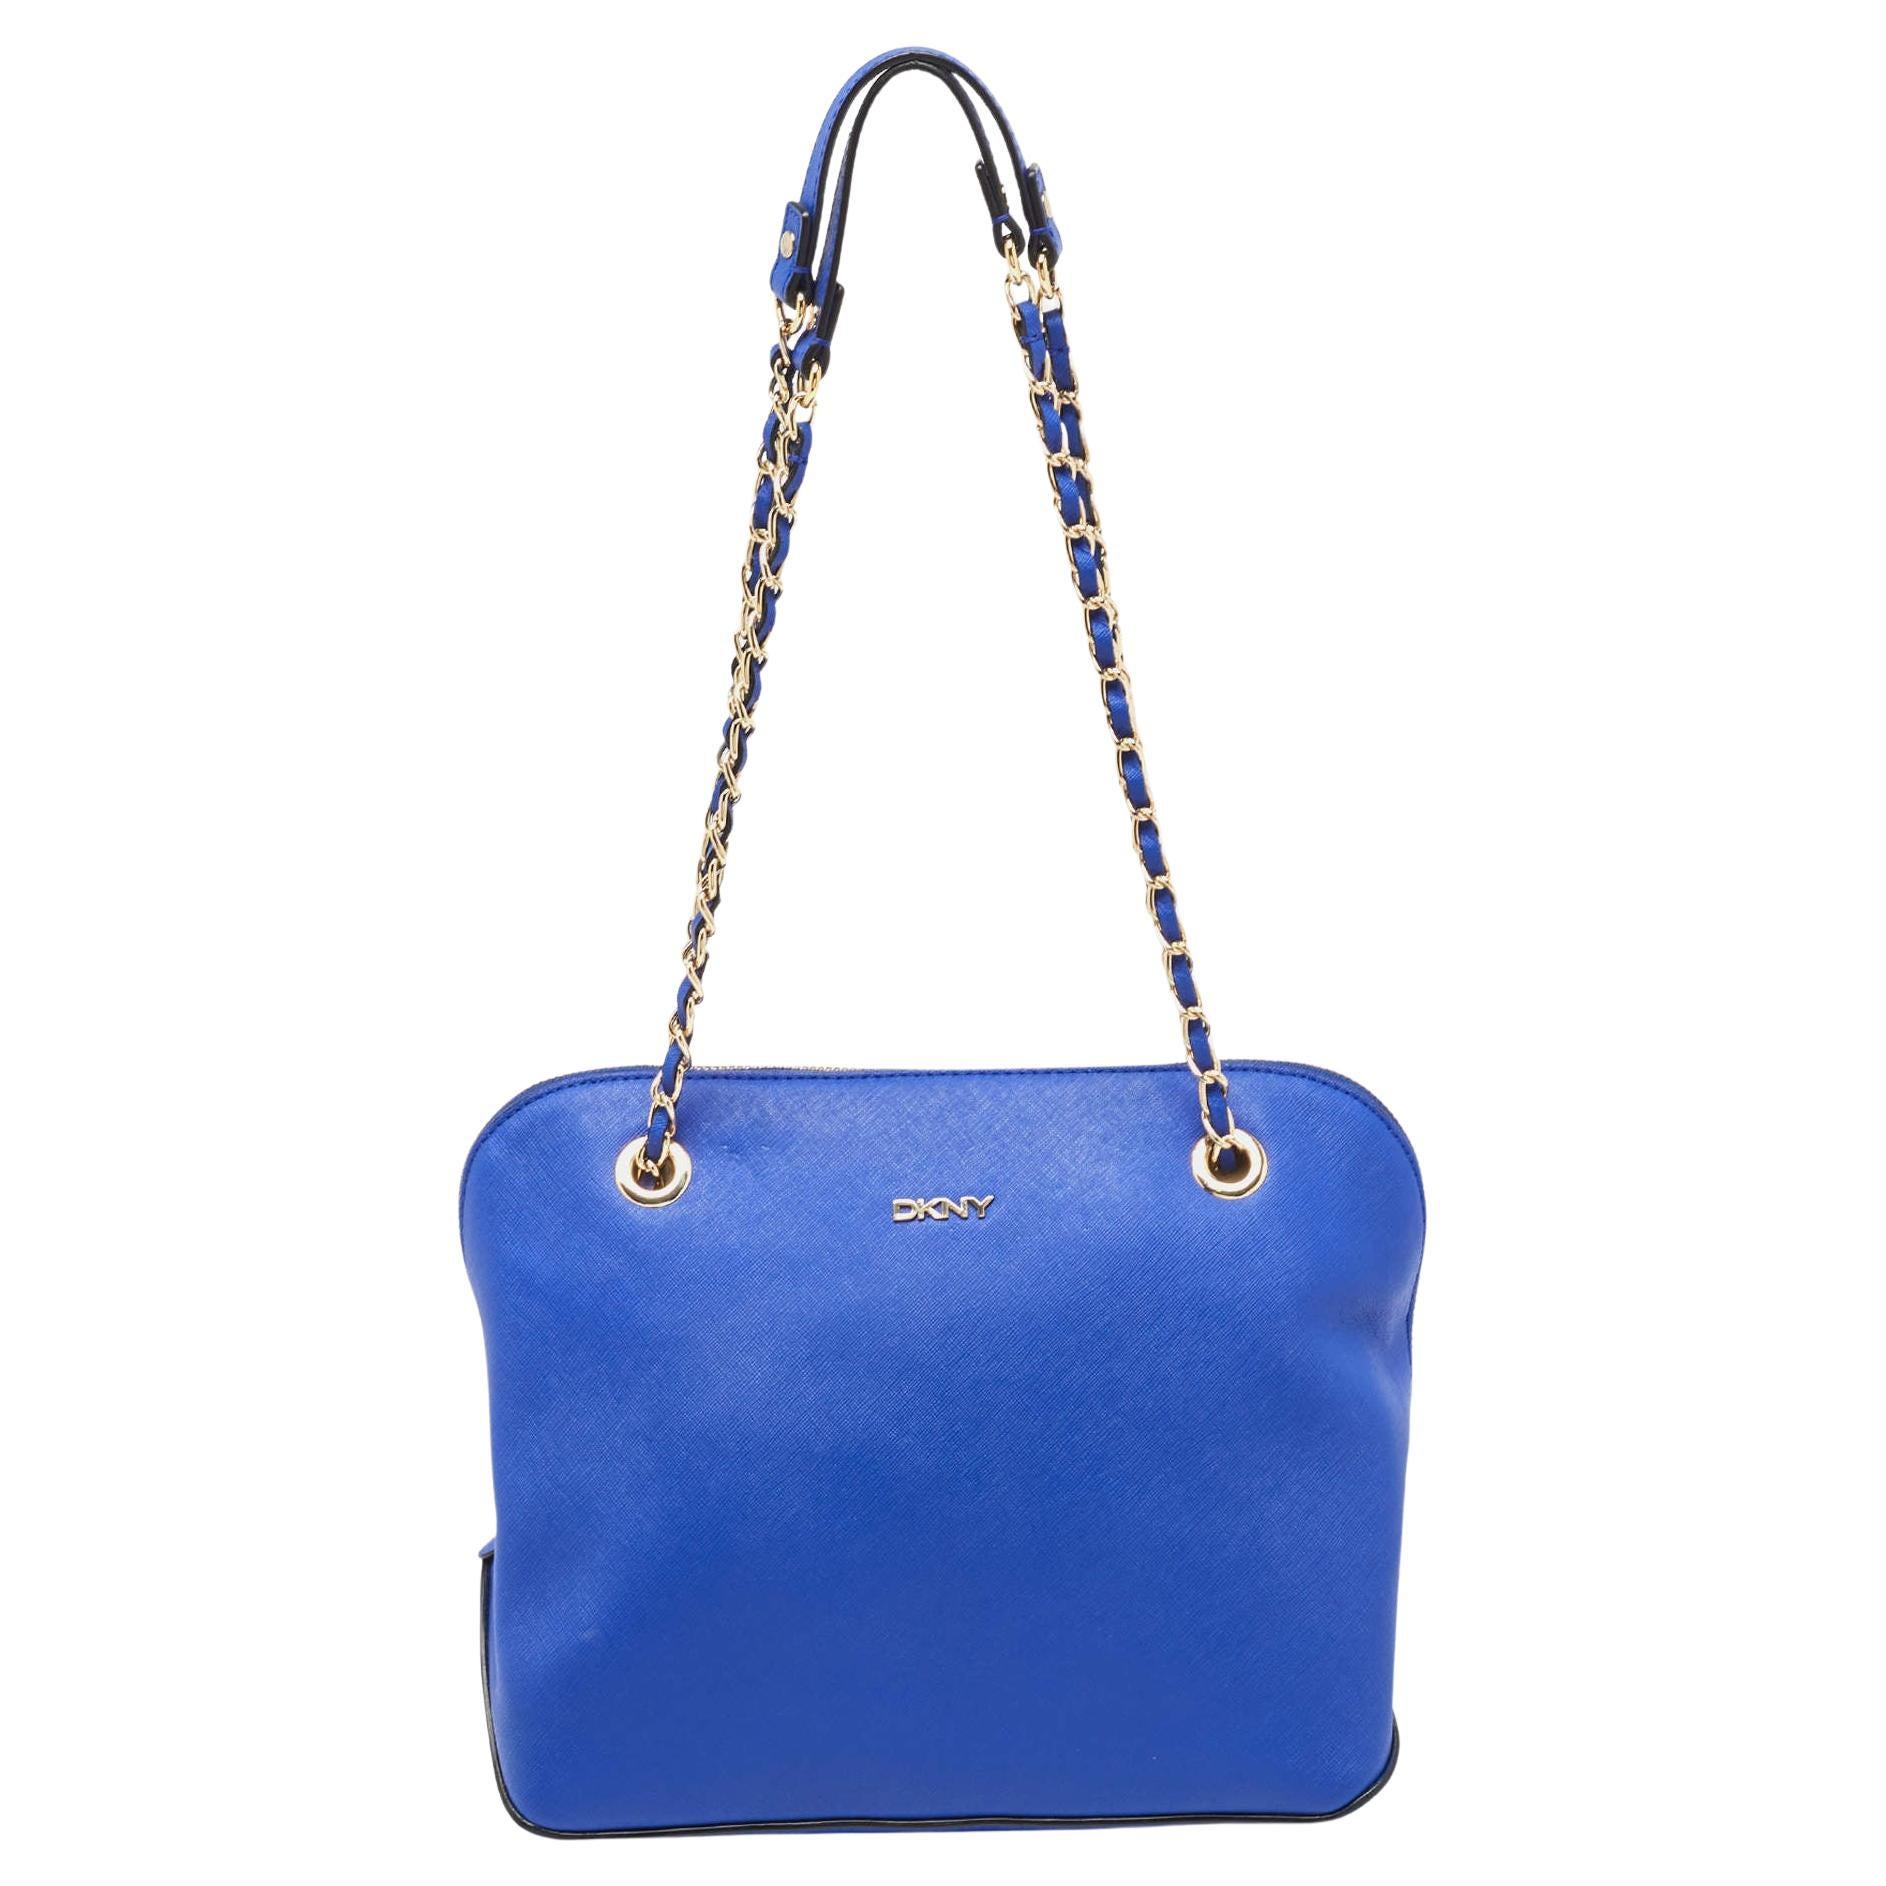 Dkny Blue Saffiano Leather Dome Shoulder Bag